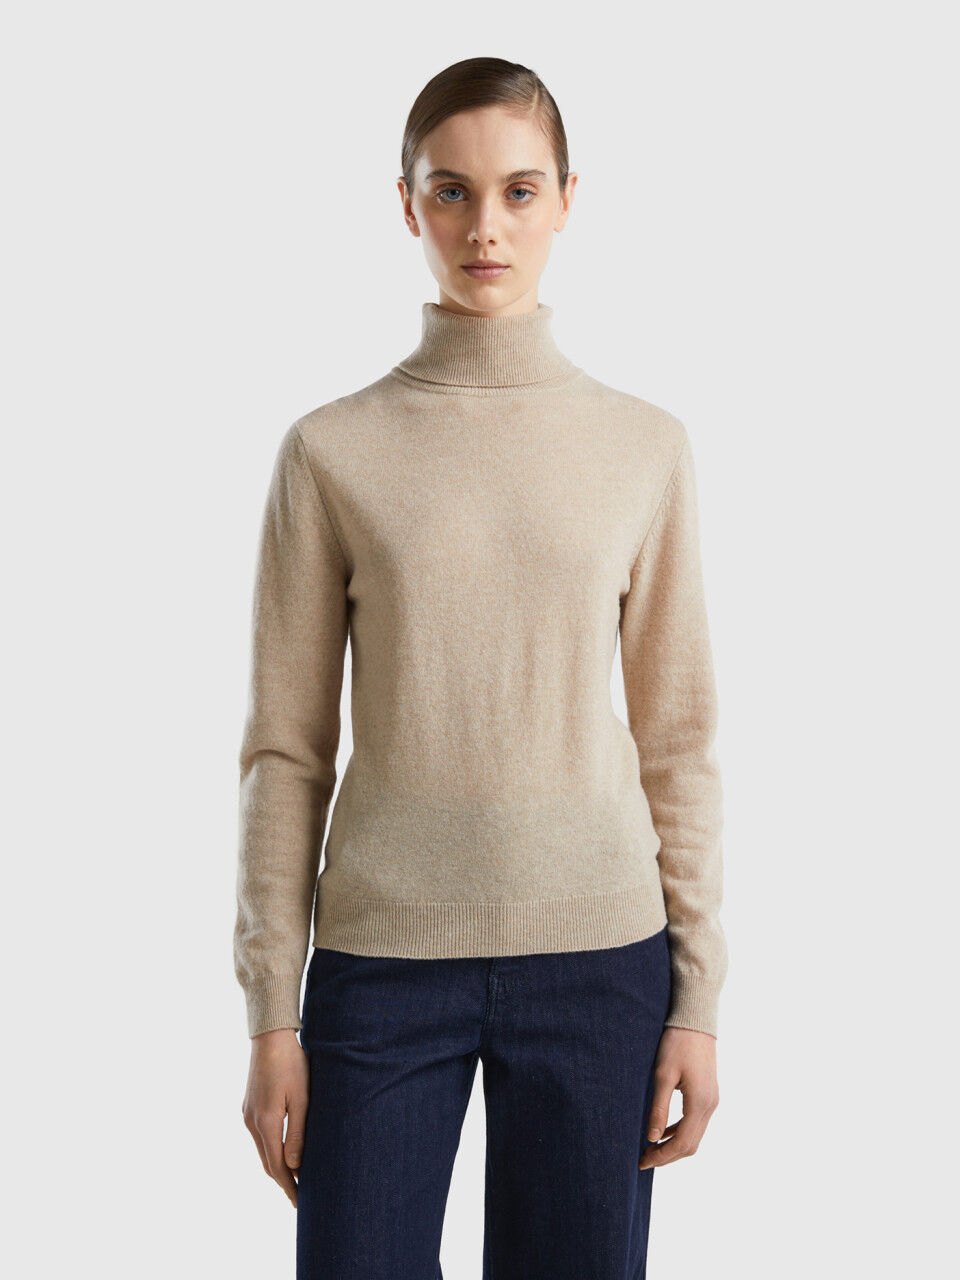 Beige turtleneck sweater in pure Merino wool